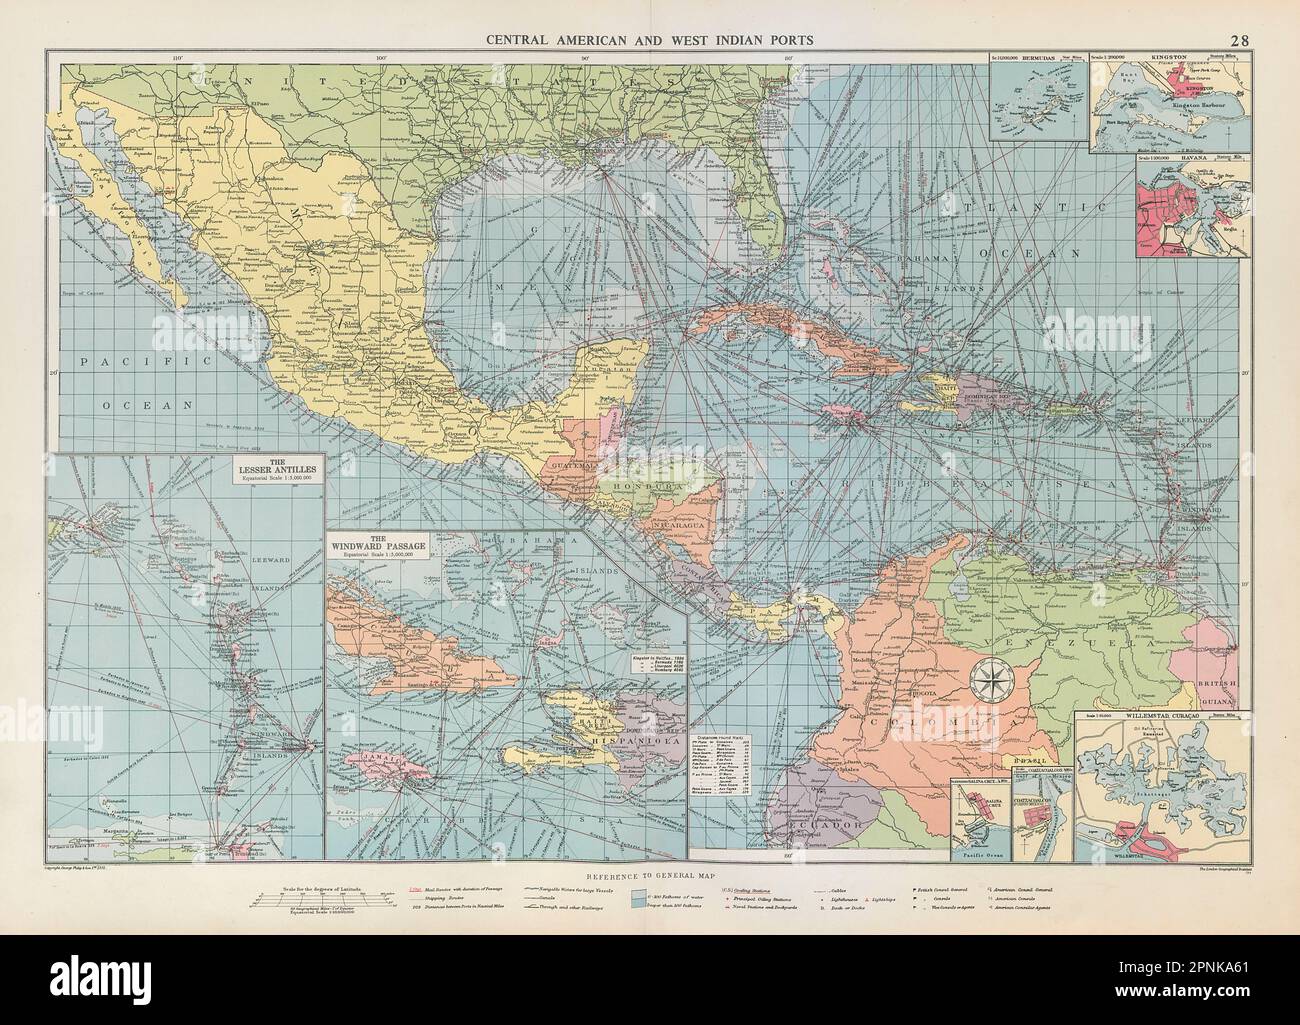 Zentralamerika Karibik Golf von Mexiko Karte Häfen Leuchttürme GROSSE 1952 Karte Stockfoto